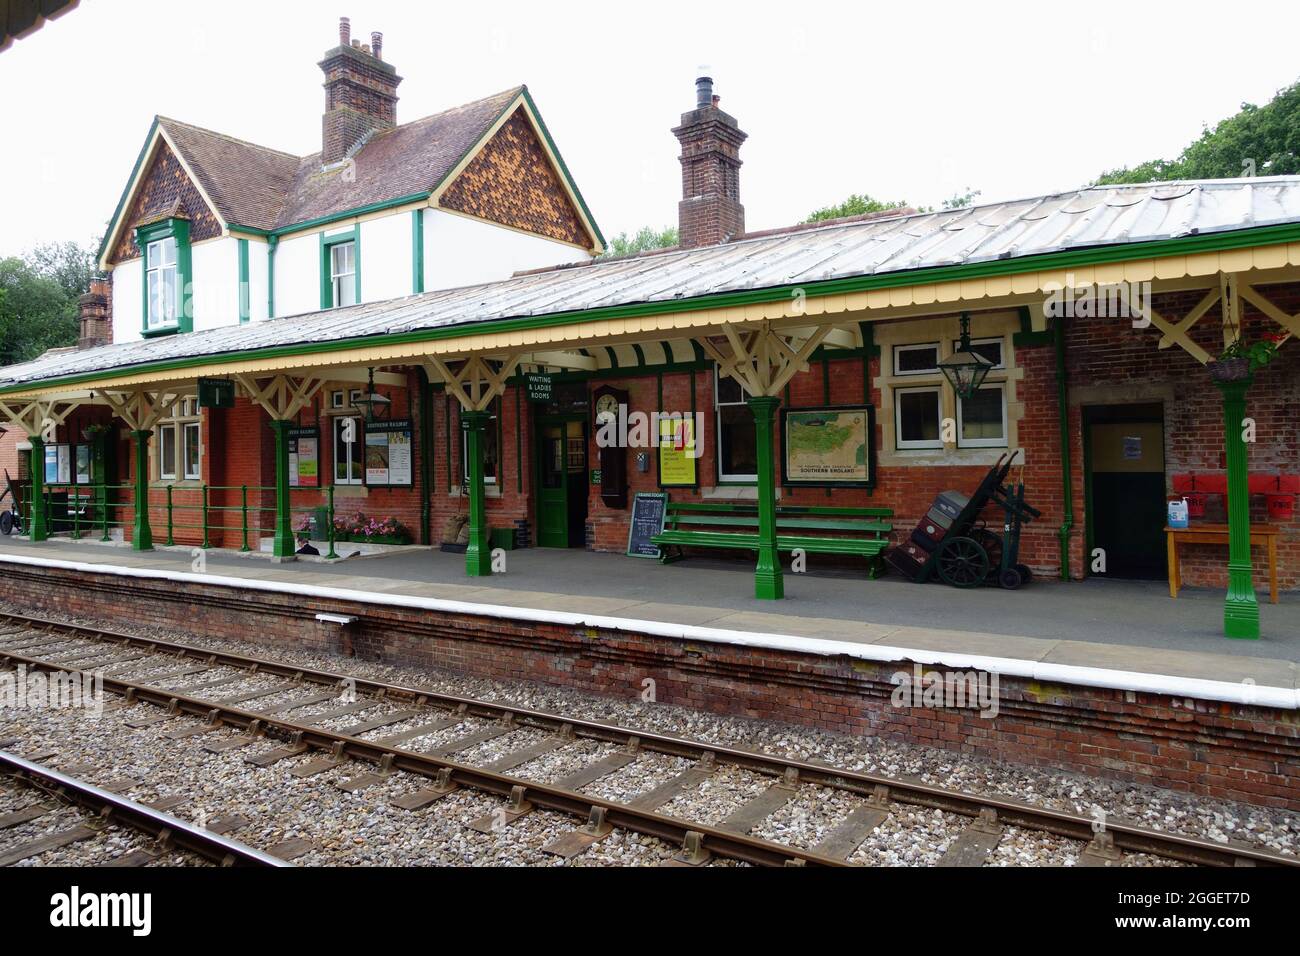 Kingscote vintage railway station on the Bluebell railway line Stock Photo